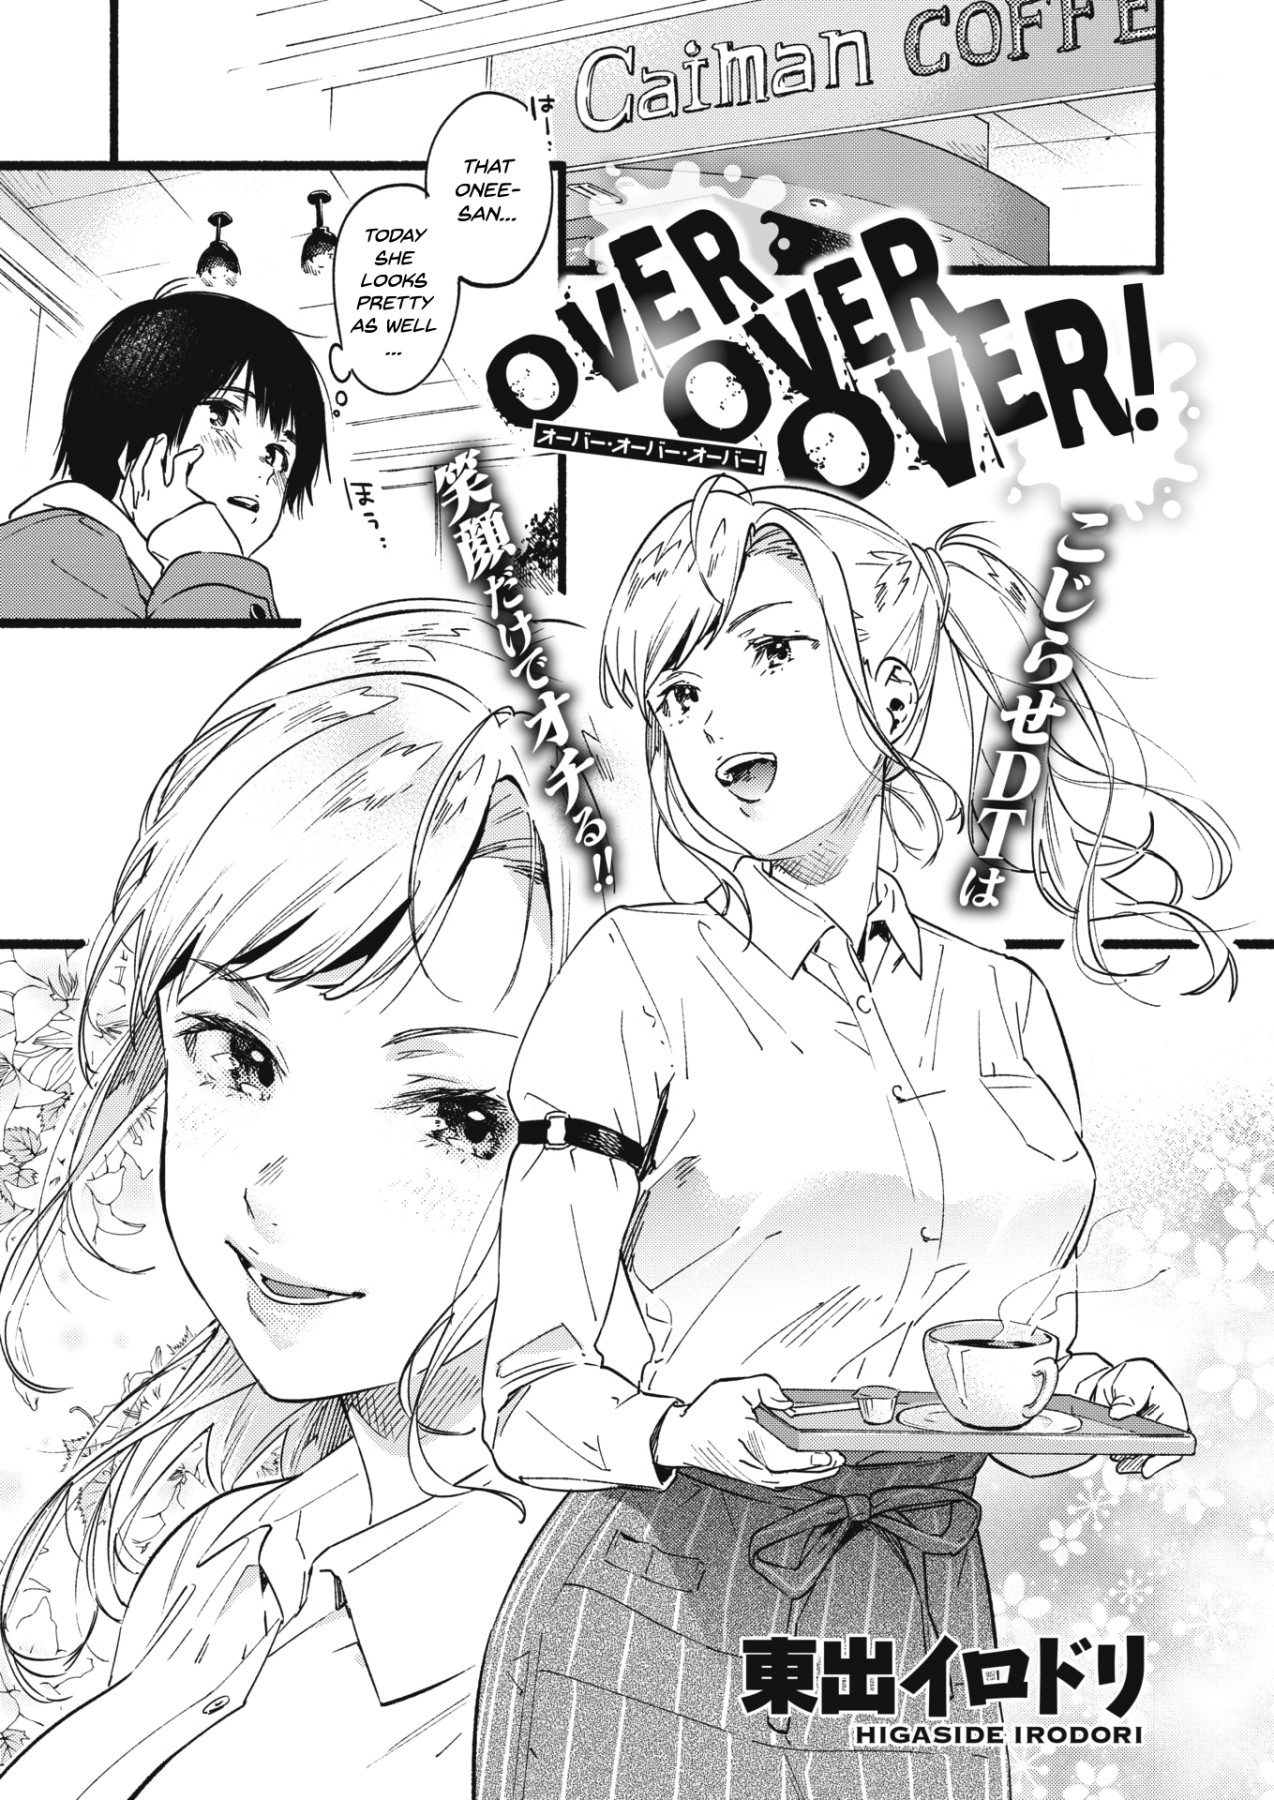 Hentai Manga Comic-OVER OVER OVER!-Read-1